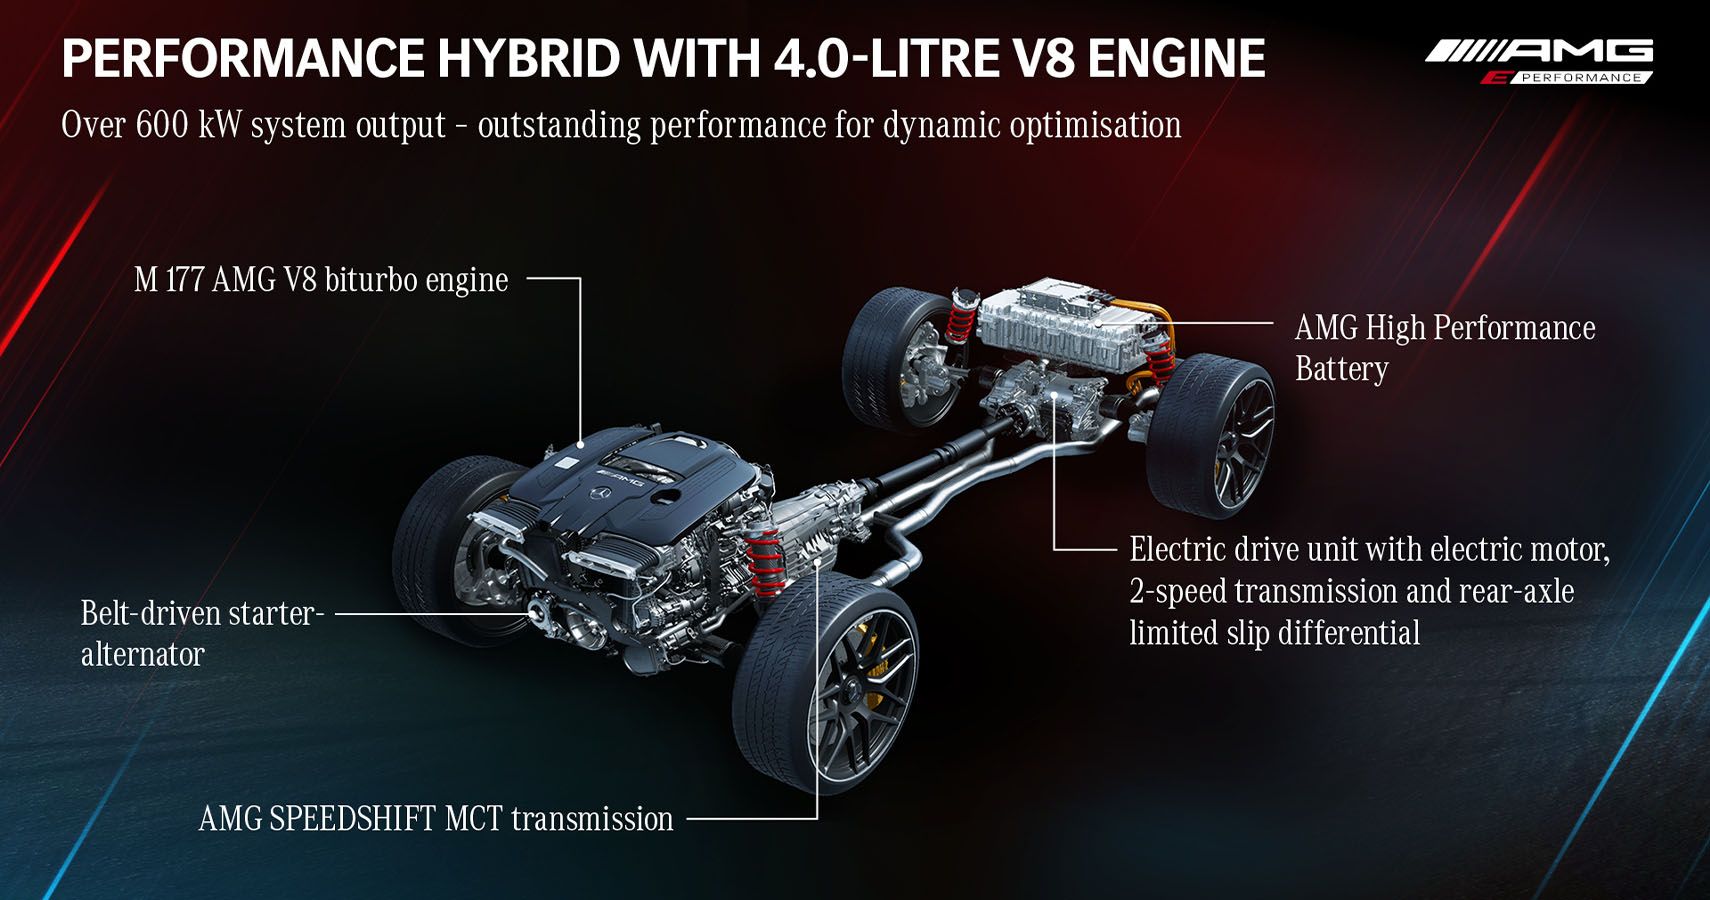 Mercedes AMG Hybrid Program 4